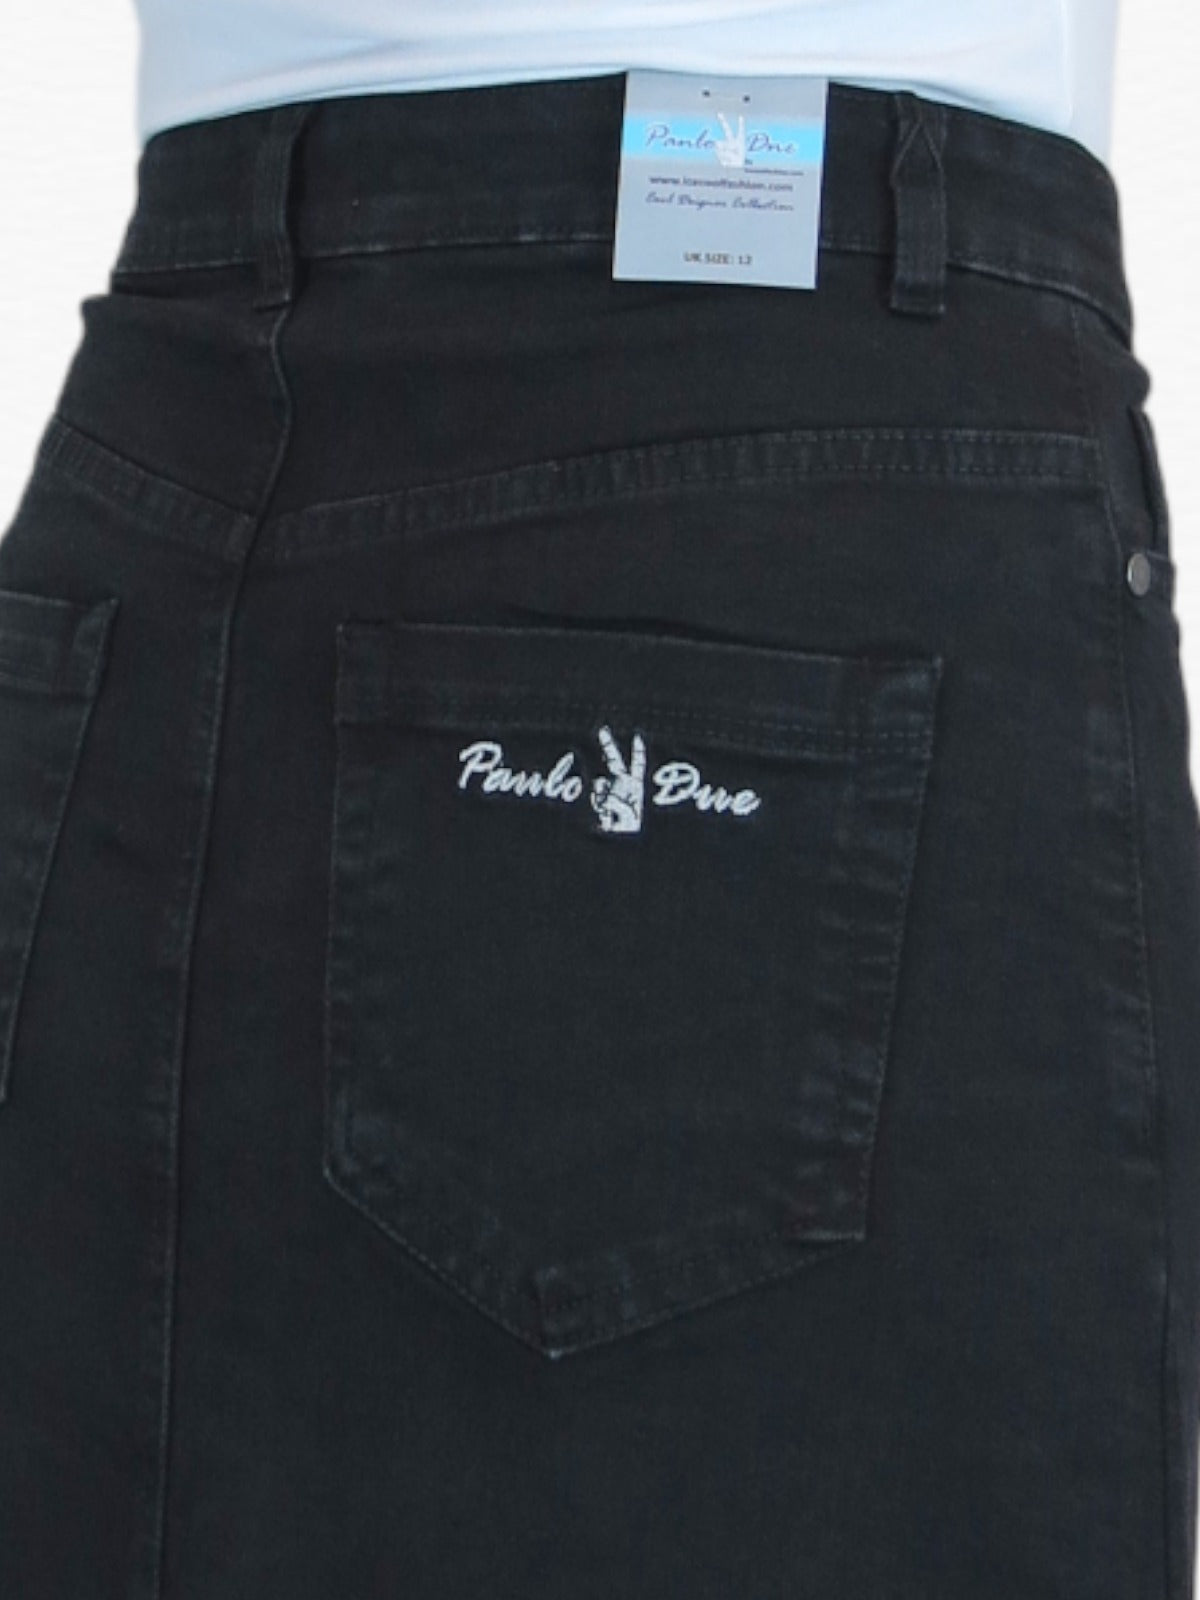 Stretch Denim Jeans Maxi Skirt Black